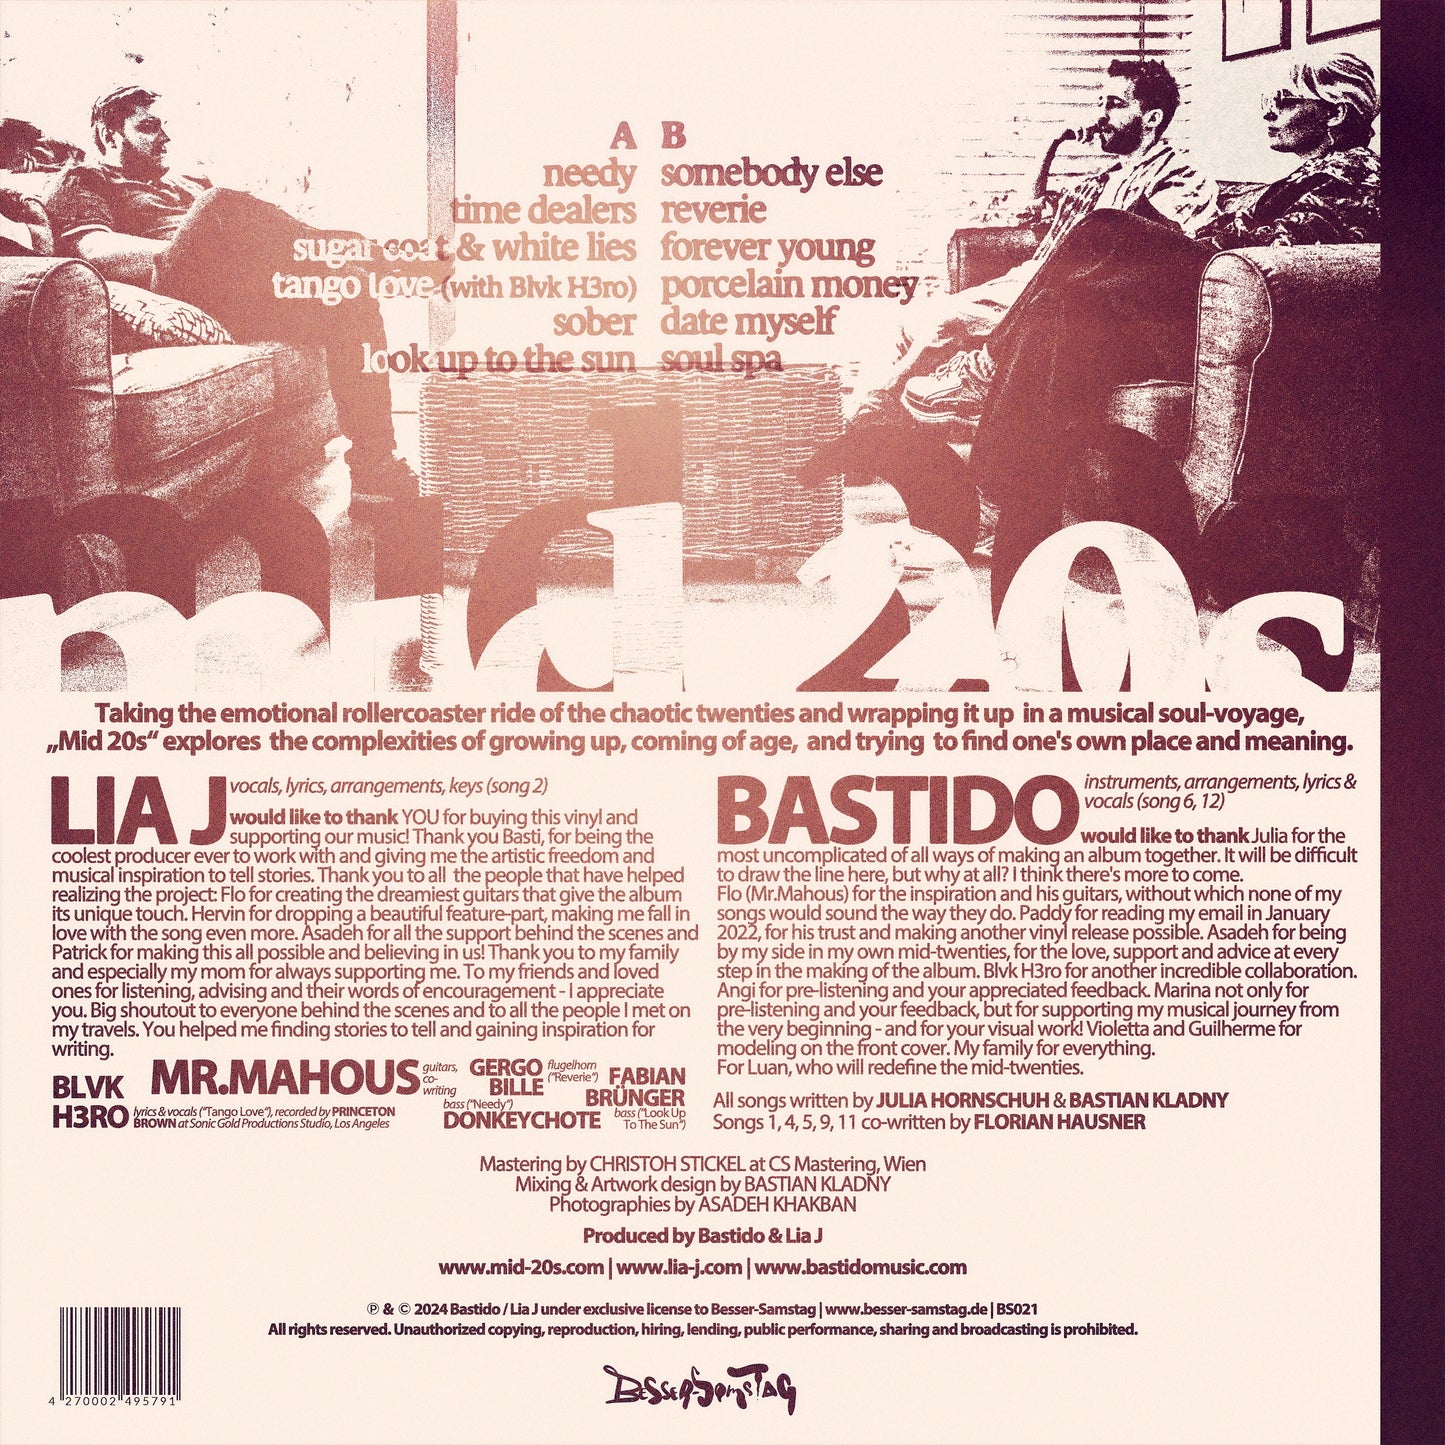 Bastido & Lia J - Mid 20s [PRE-ORDER - Limited Vinyl]